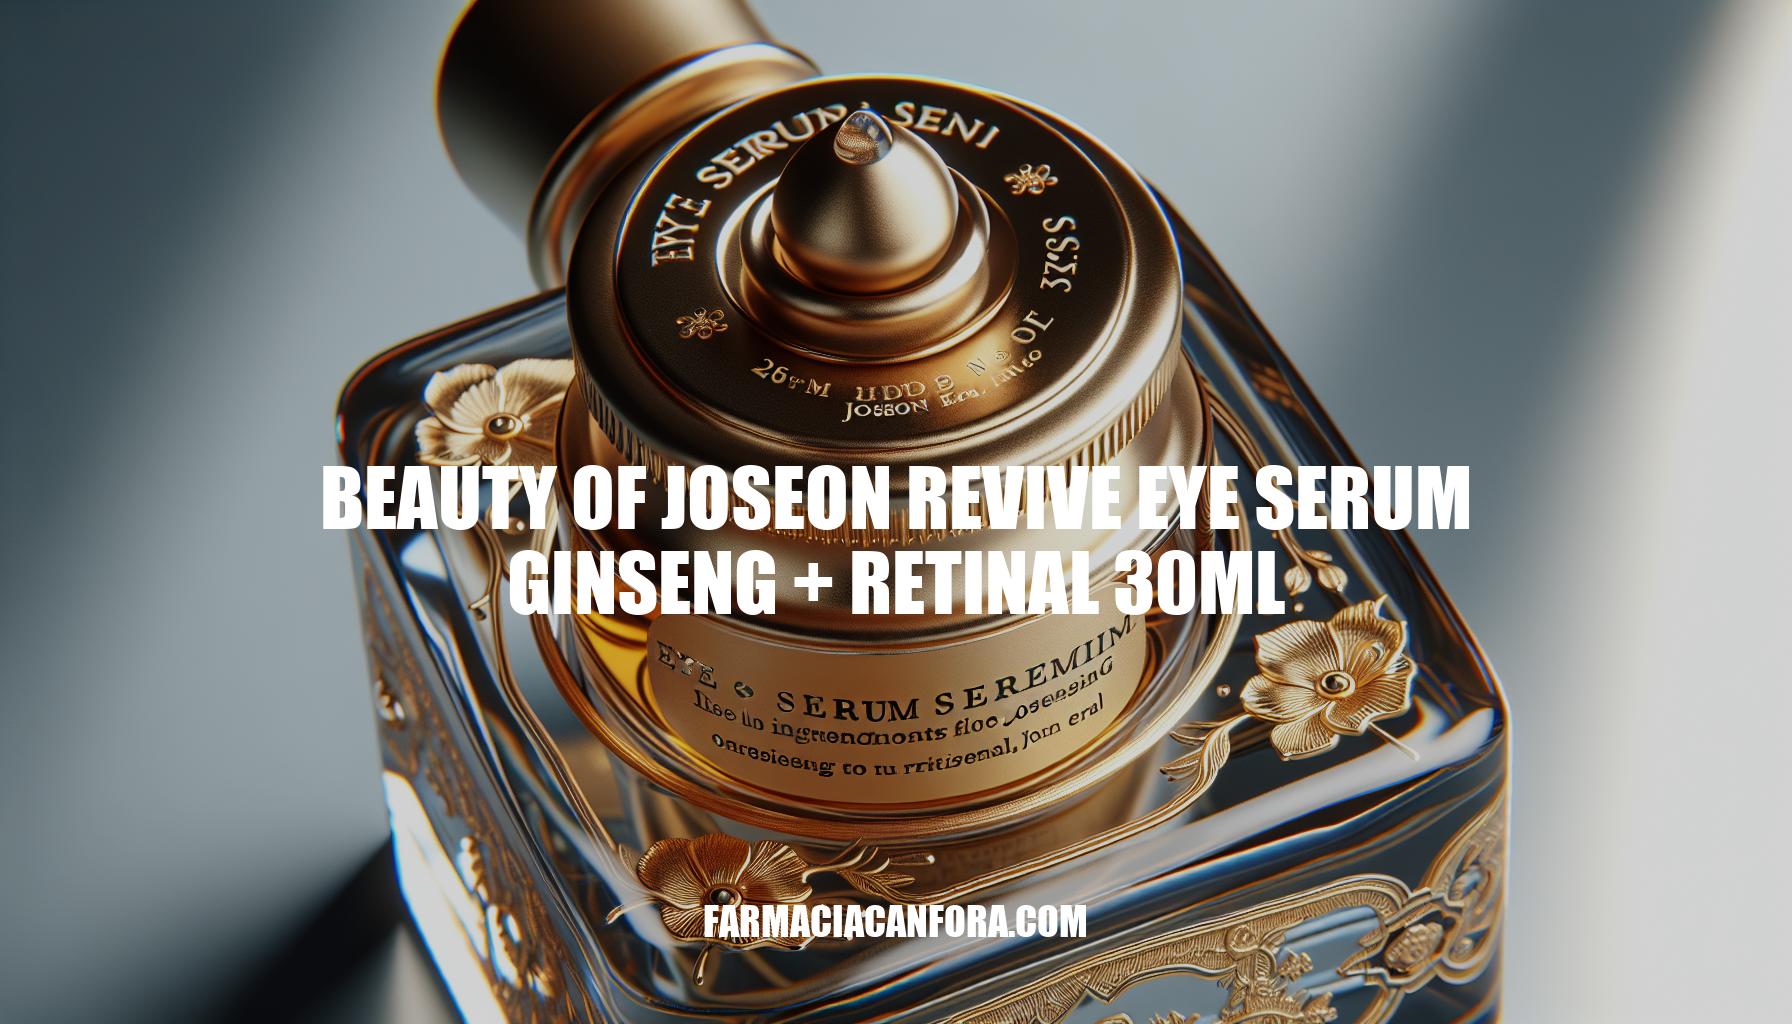 Discover the Beauty of Joseon Revive Eye Serum Ginseng + Retinal 30ml